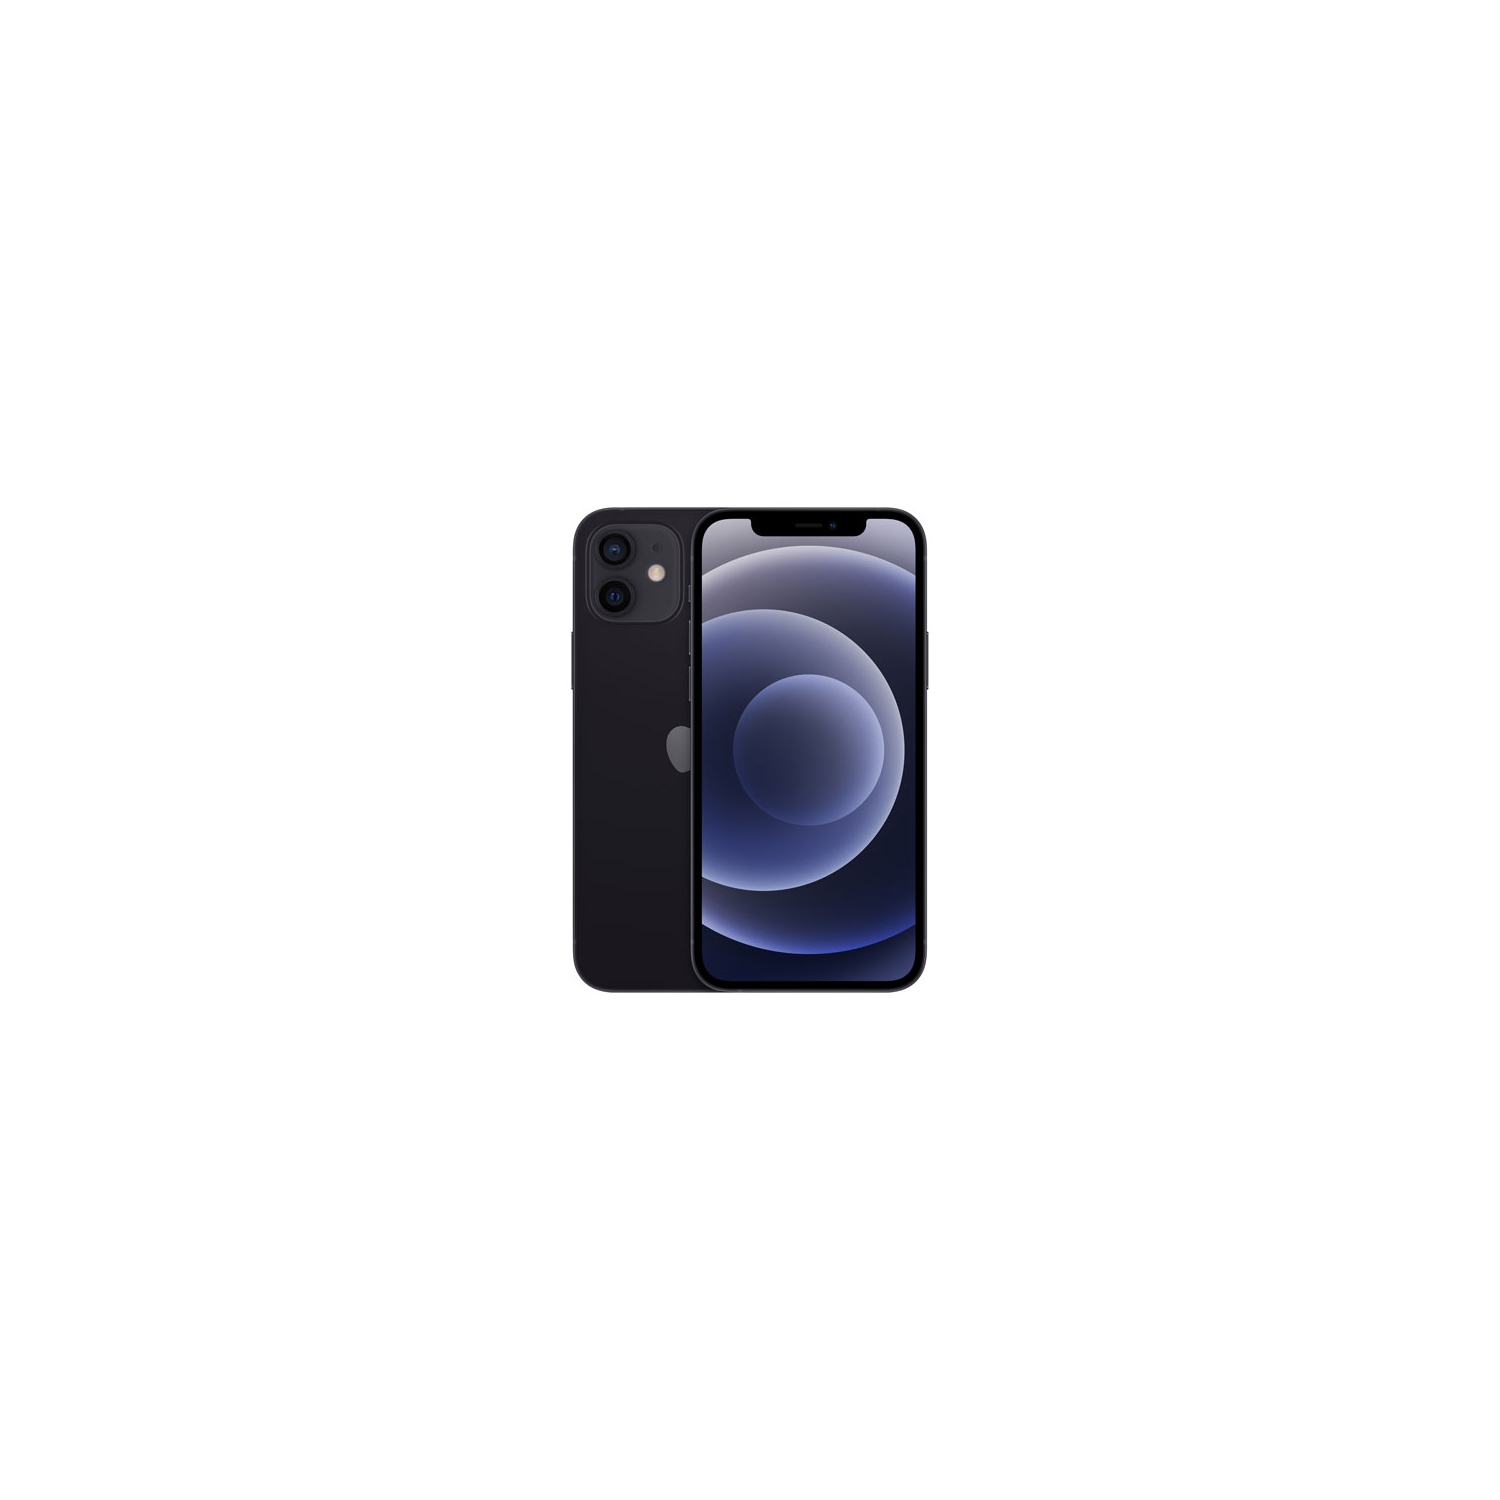 Refurbished (Excellent) - Apple iPhone 12 128GB Smartphone - Black - Unlocked - Certified Refurbished